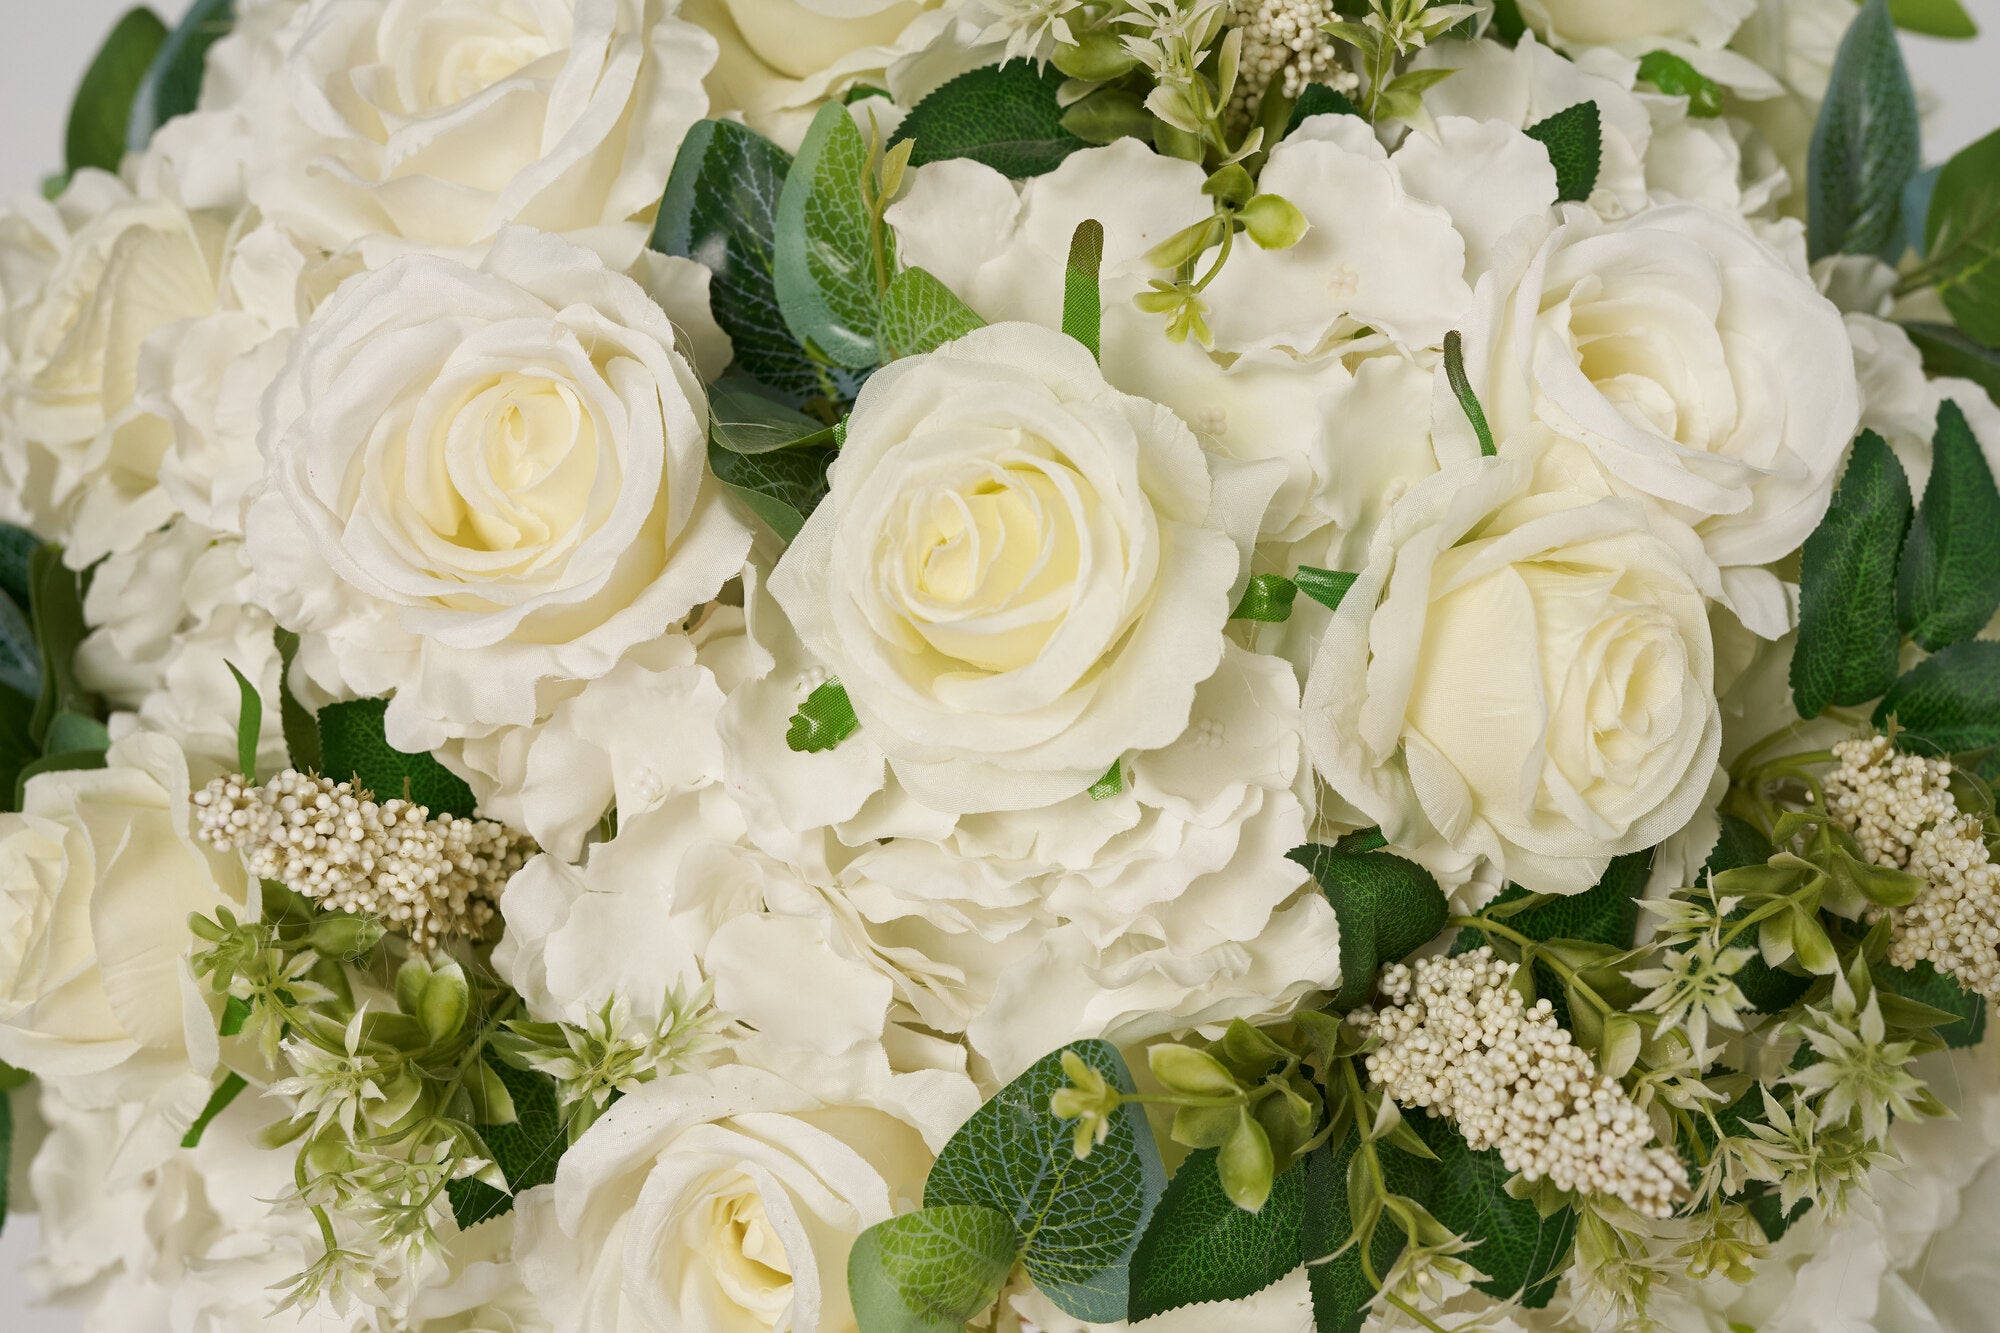 Flower Ball White Rose & Small Hydrangea Wedding Proposal Party Centerpieces Decor